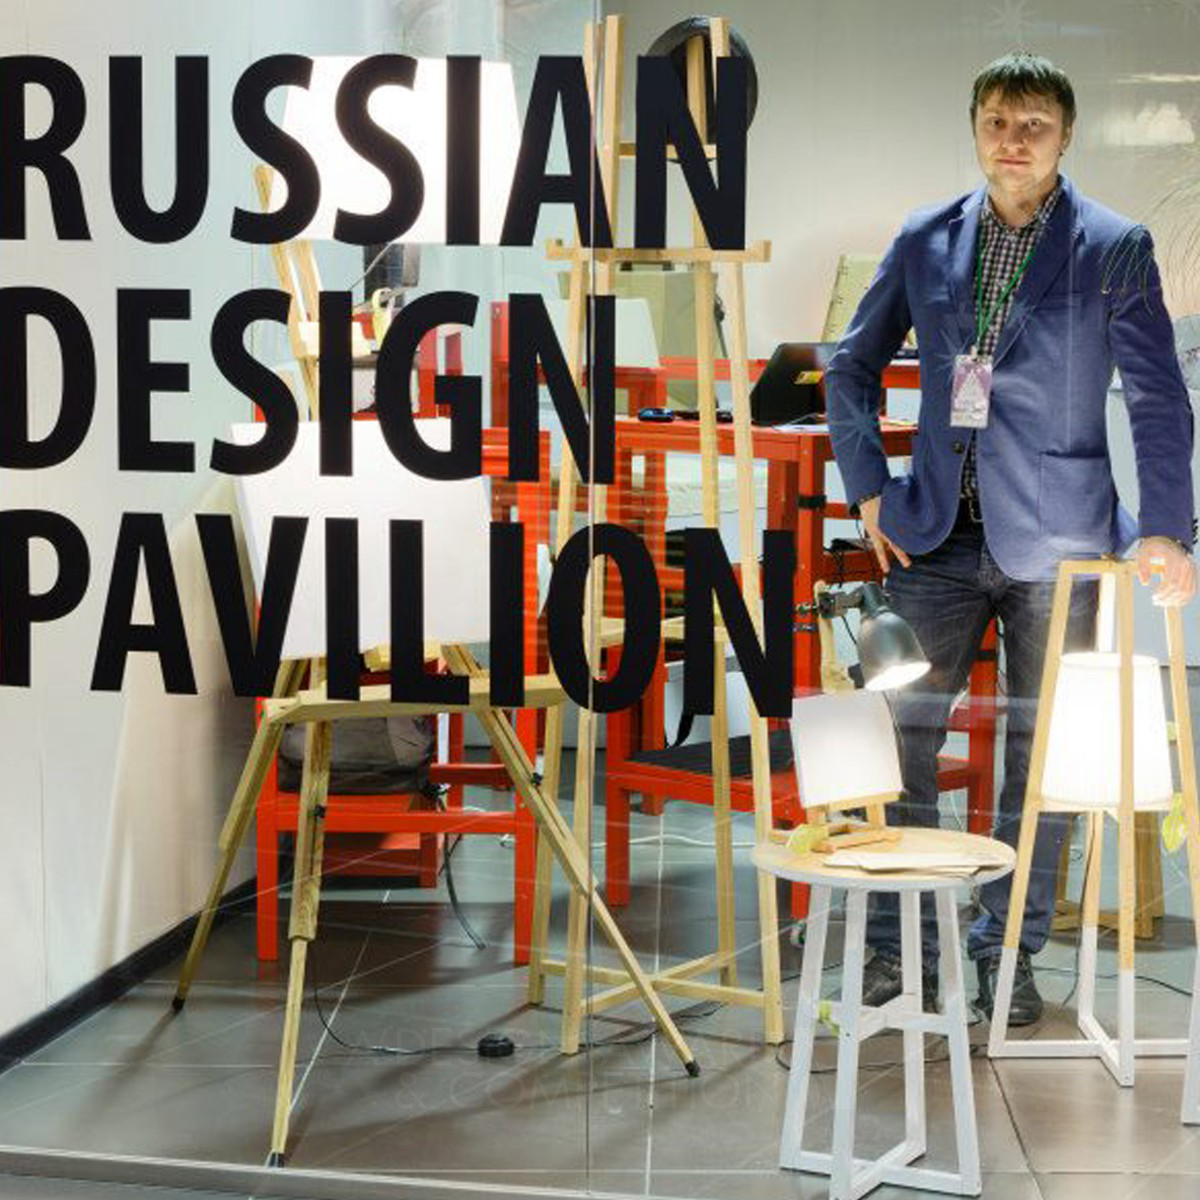 Russian Design Pavilion <b>Program of design events